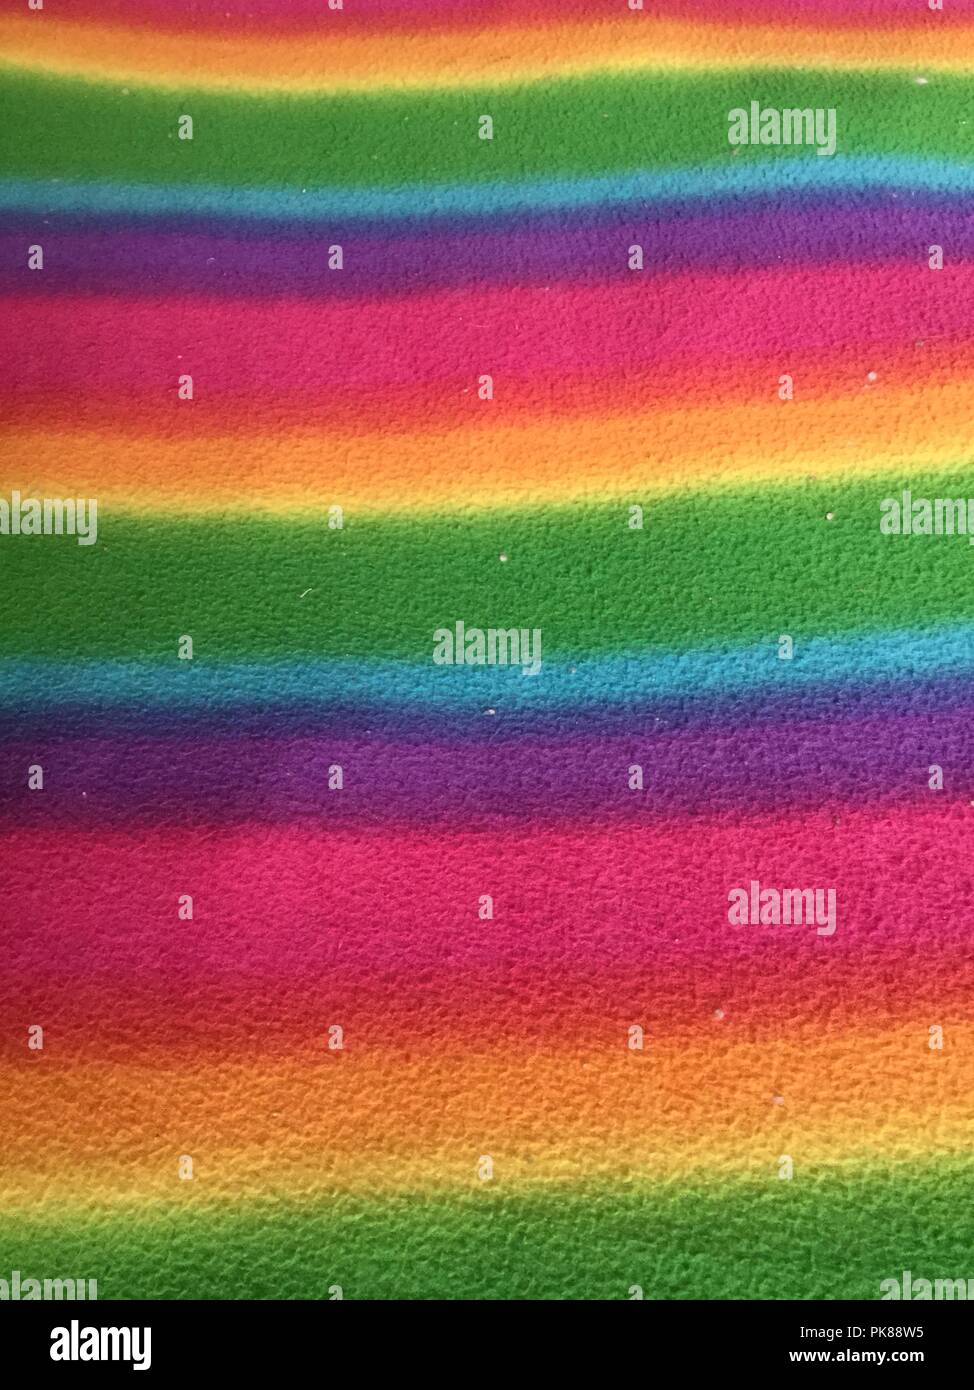 Bars of horizontal color on soft fabric. Stock Photo